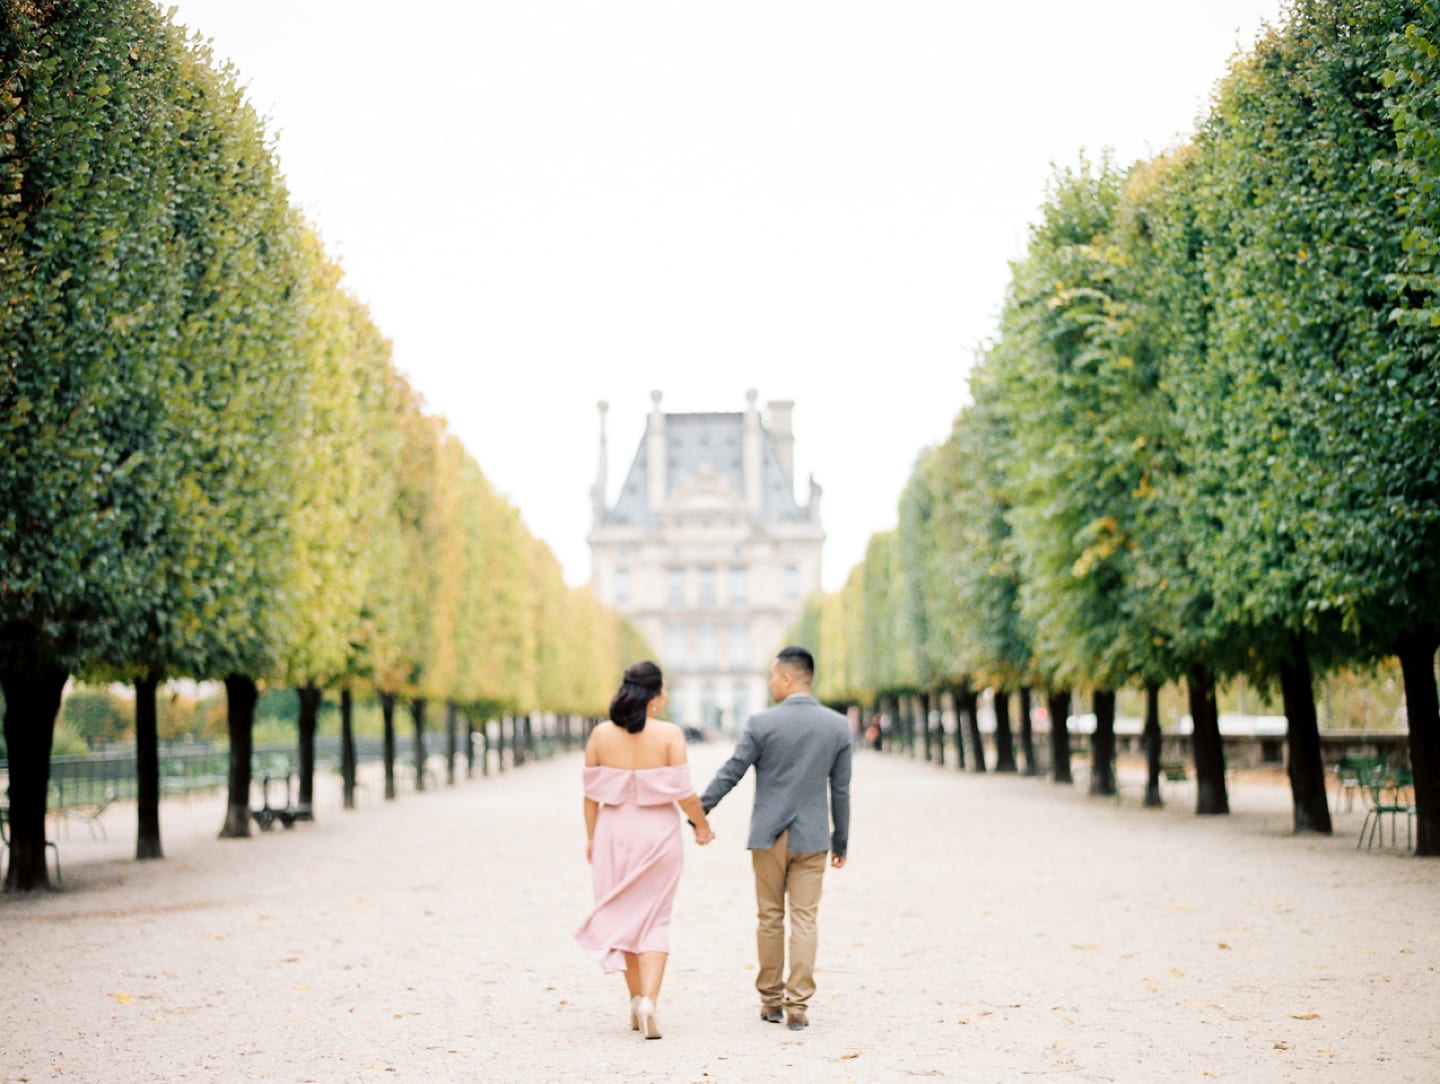 louvre_tuileries_gardens_paris_france_engagement_0015.jpg